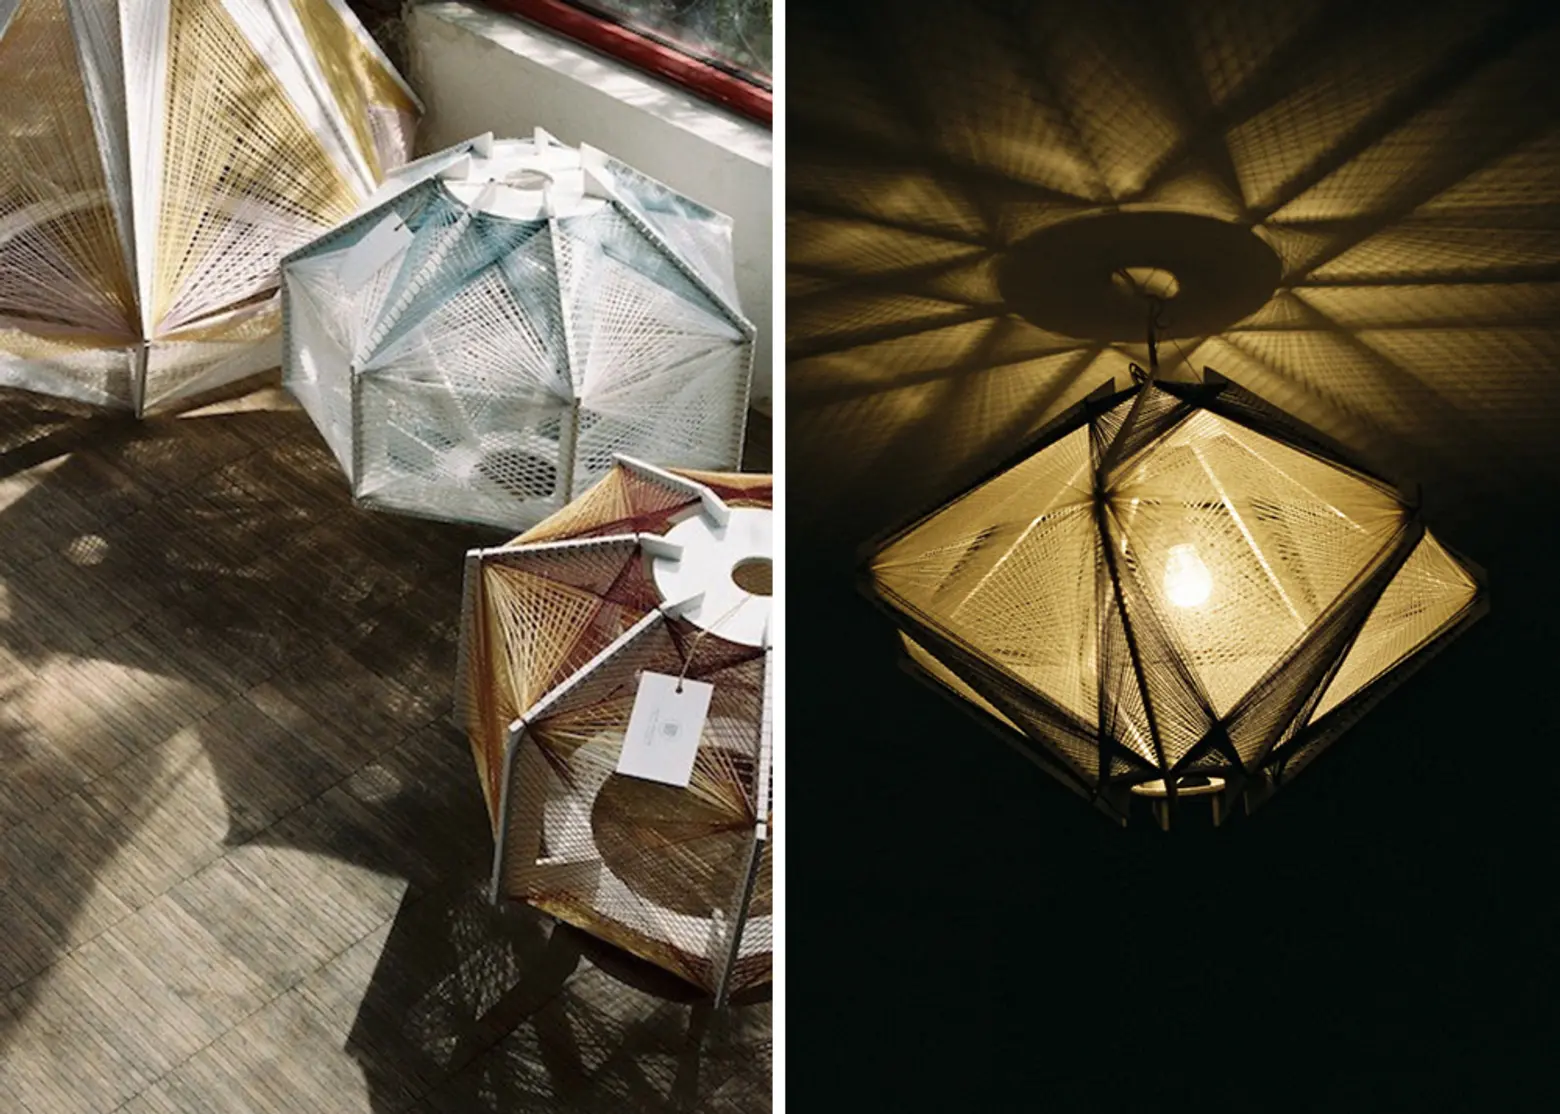 Julie Lansom, Retro-Futuristic style, Sputnik Lamps, paris-based designer, wood and thread, geometric lamps, French design, Russian satellite